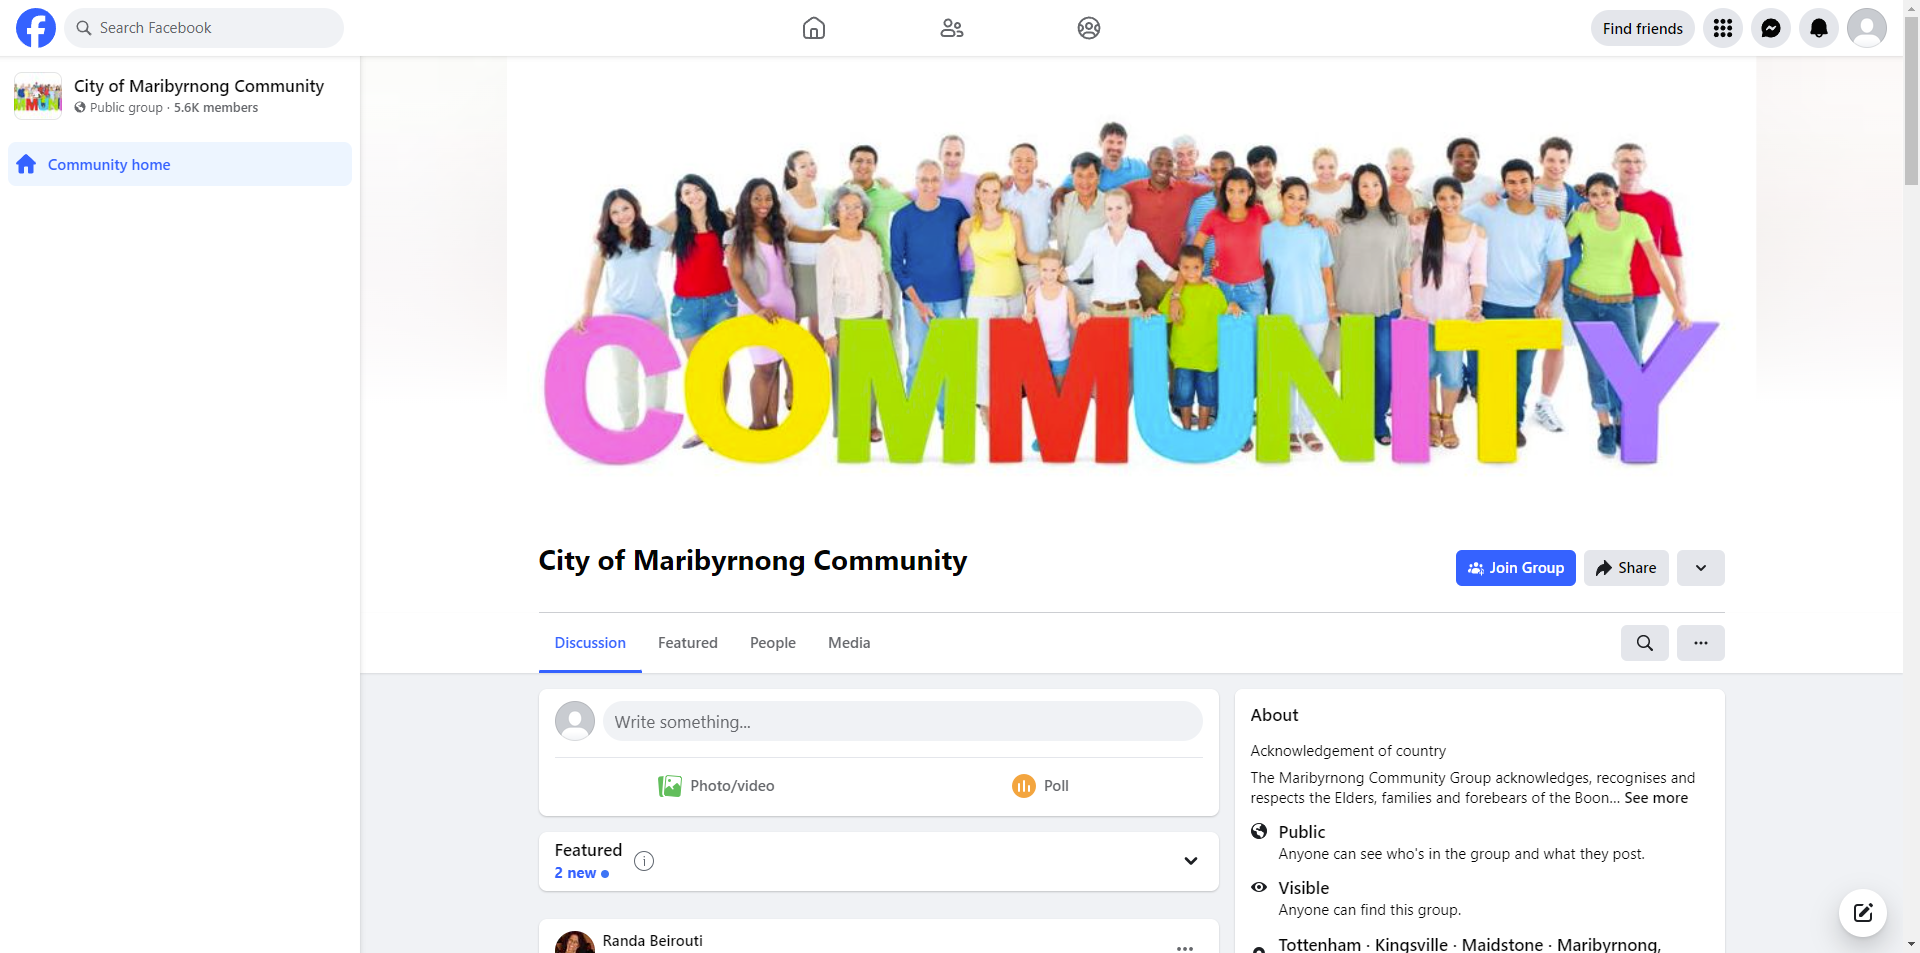 City of Maribyrnong Community